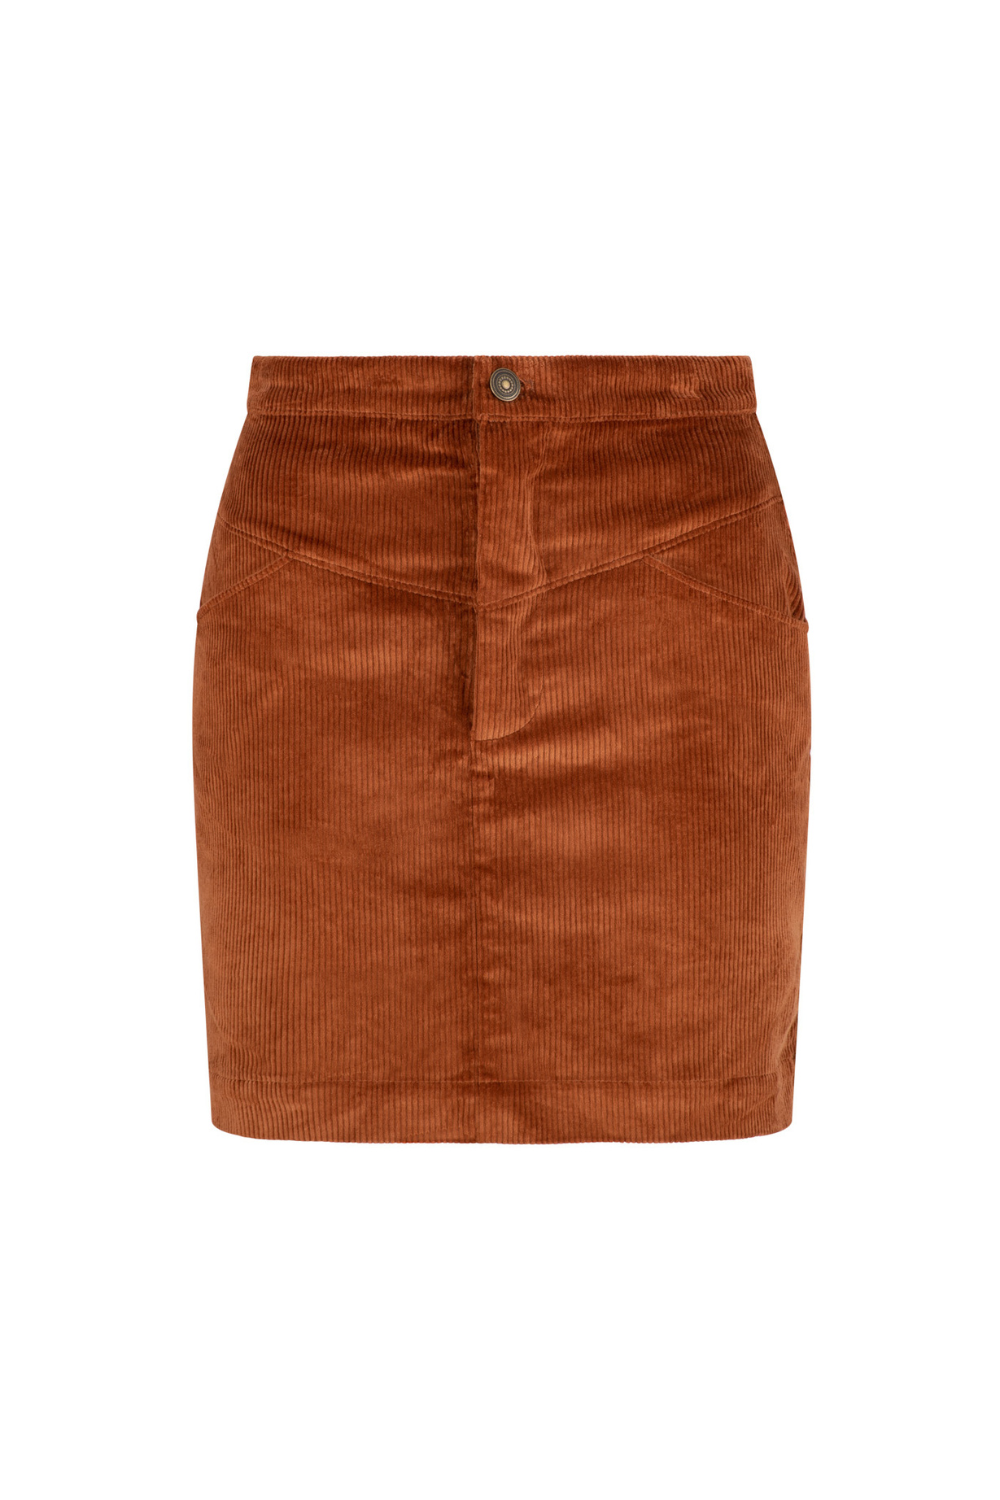 Beatrix Blaize Mini Skirt - Ochre